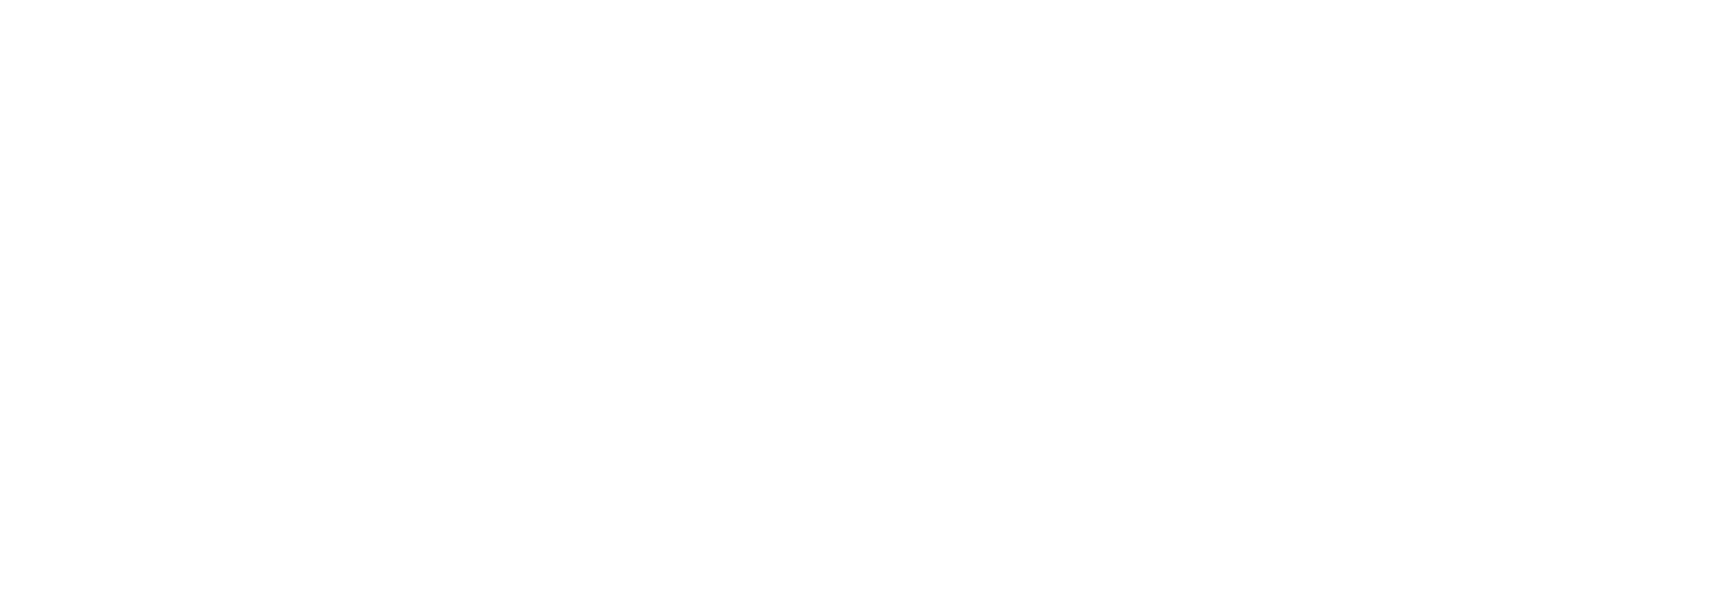 Set-jetters United logo